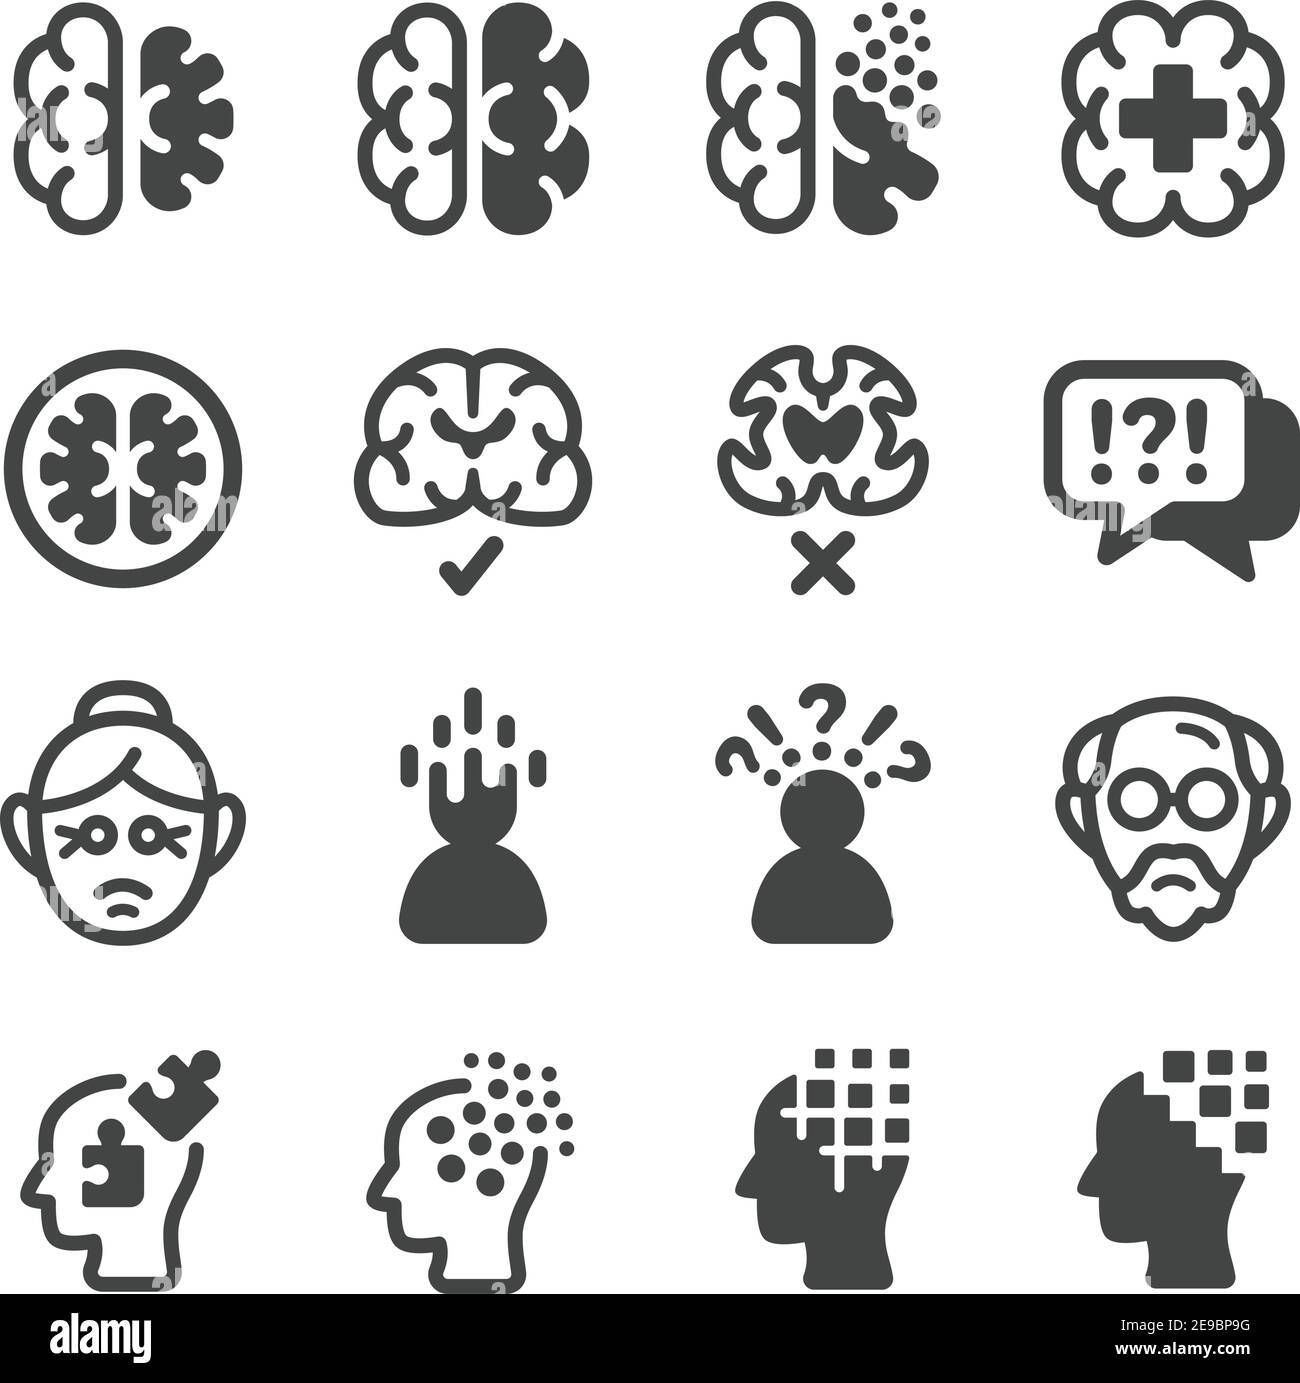 alzheimer disease icon set,vector and illustration Stock Vector